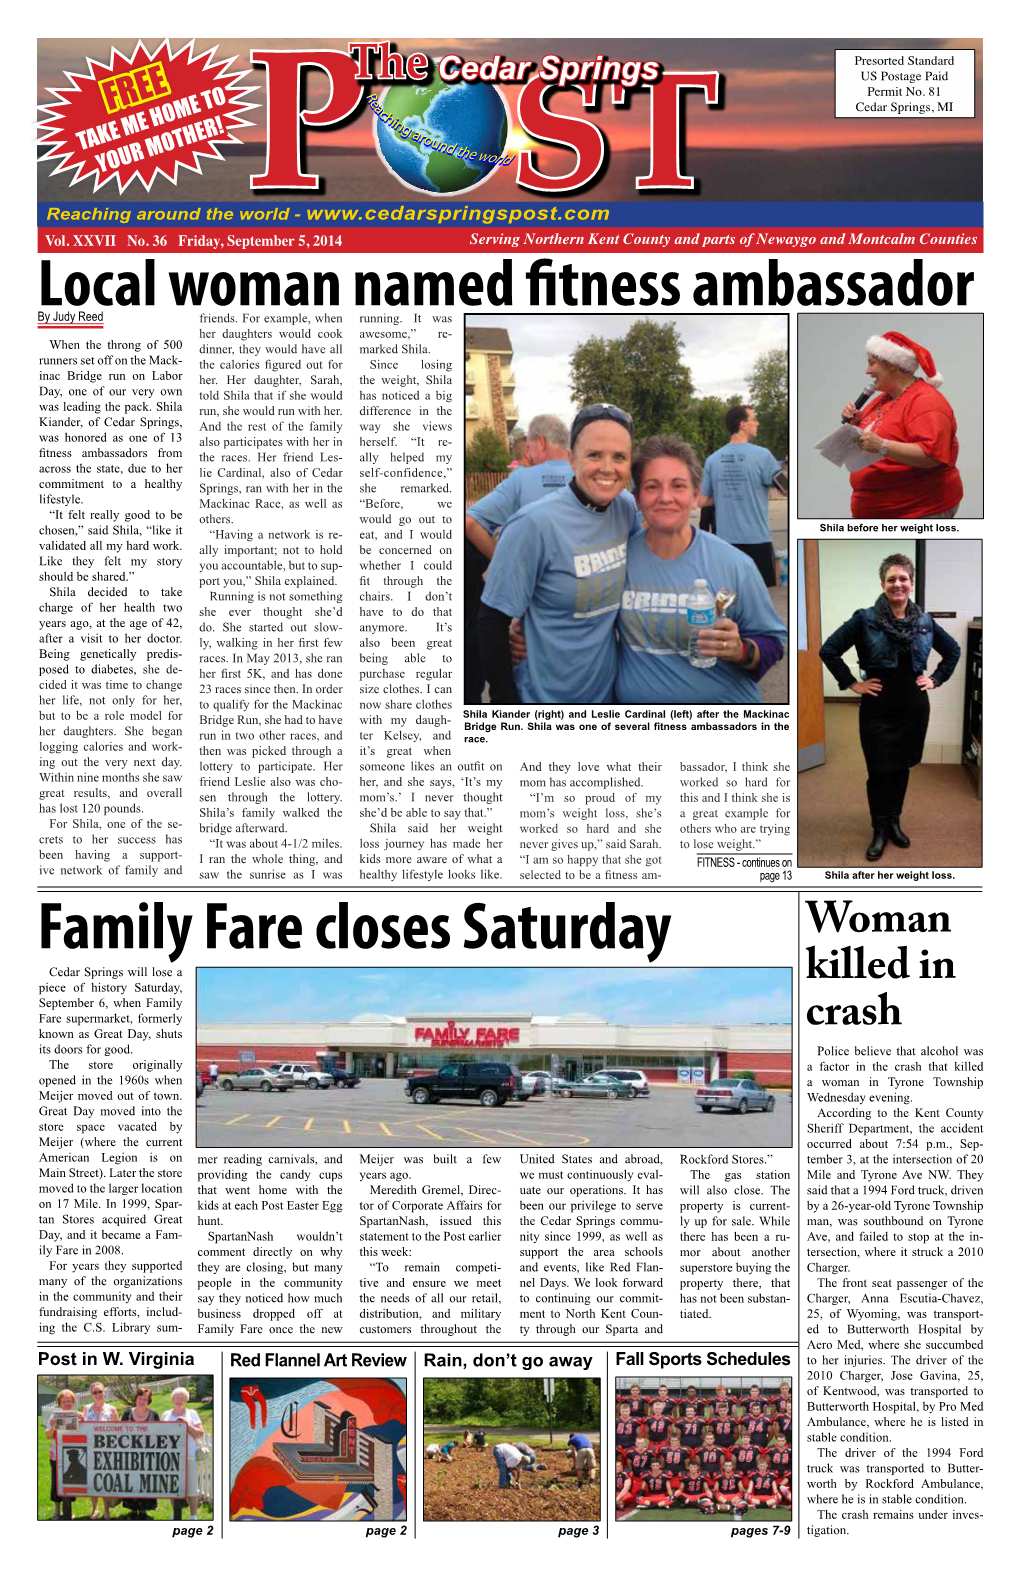 Family Fare Closes Saturday Local Woman Named Fitness Ambassador